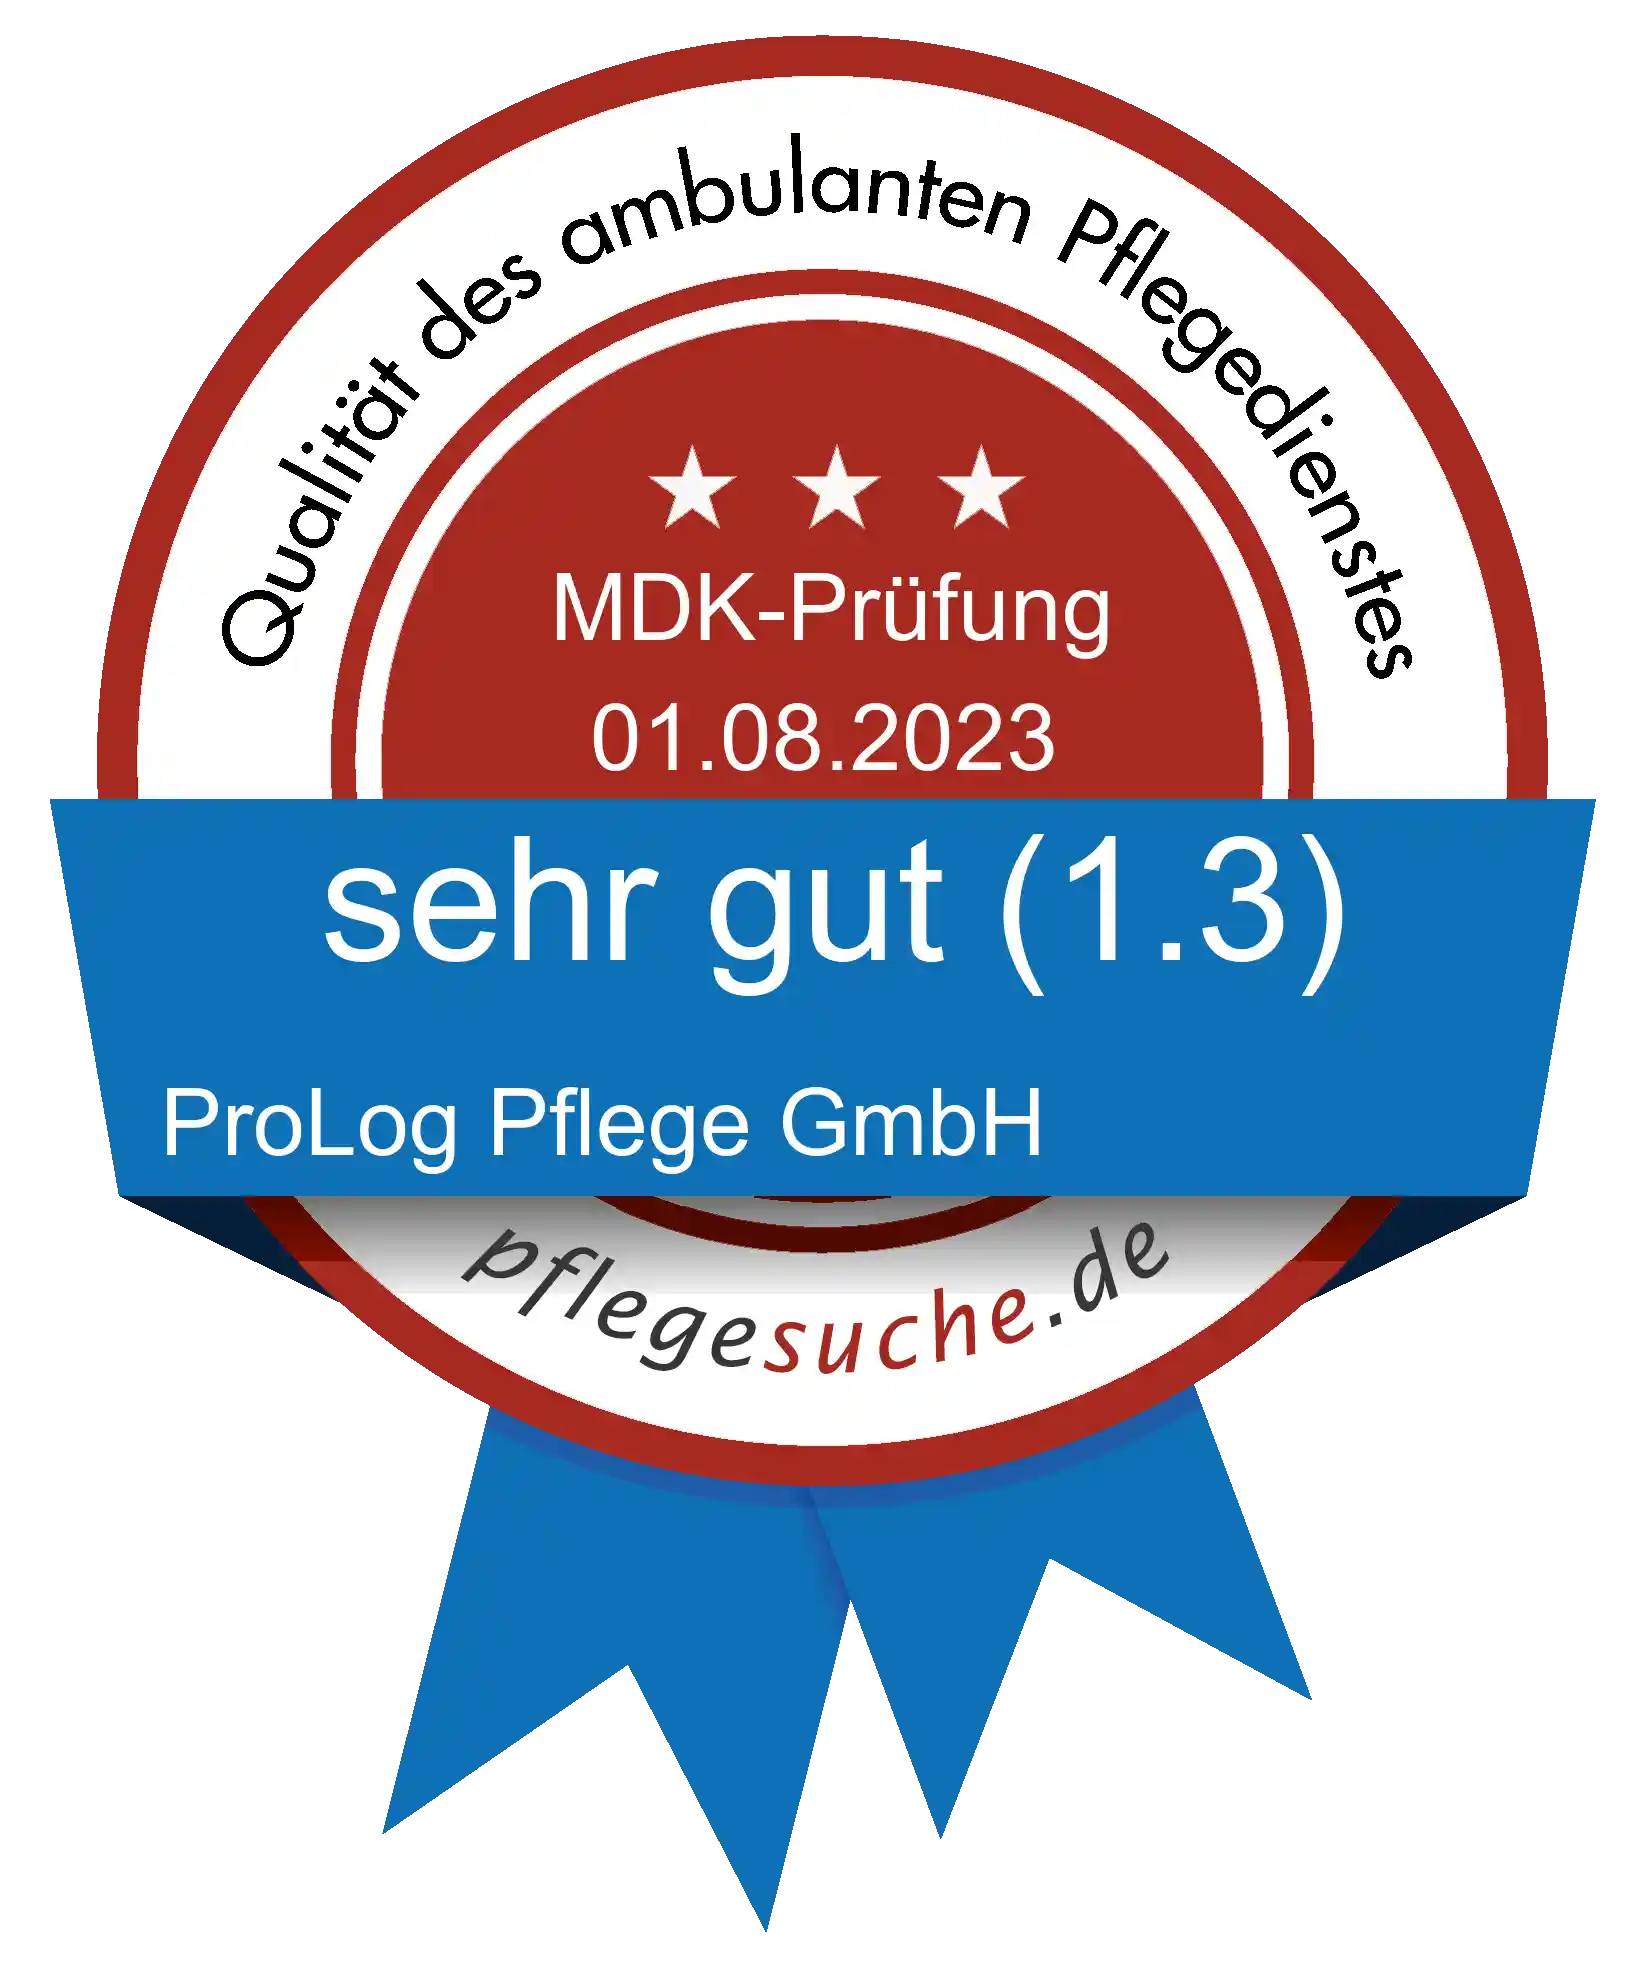 Siegel Benotung: ProLog Pflege GmbH